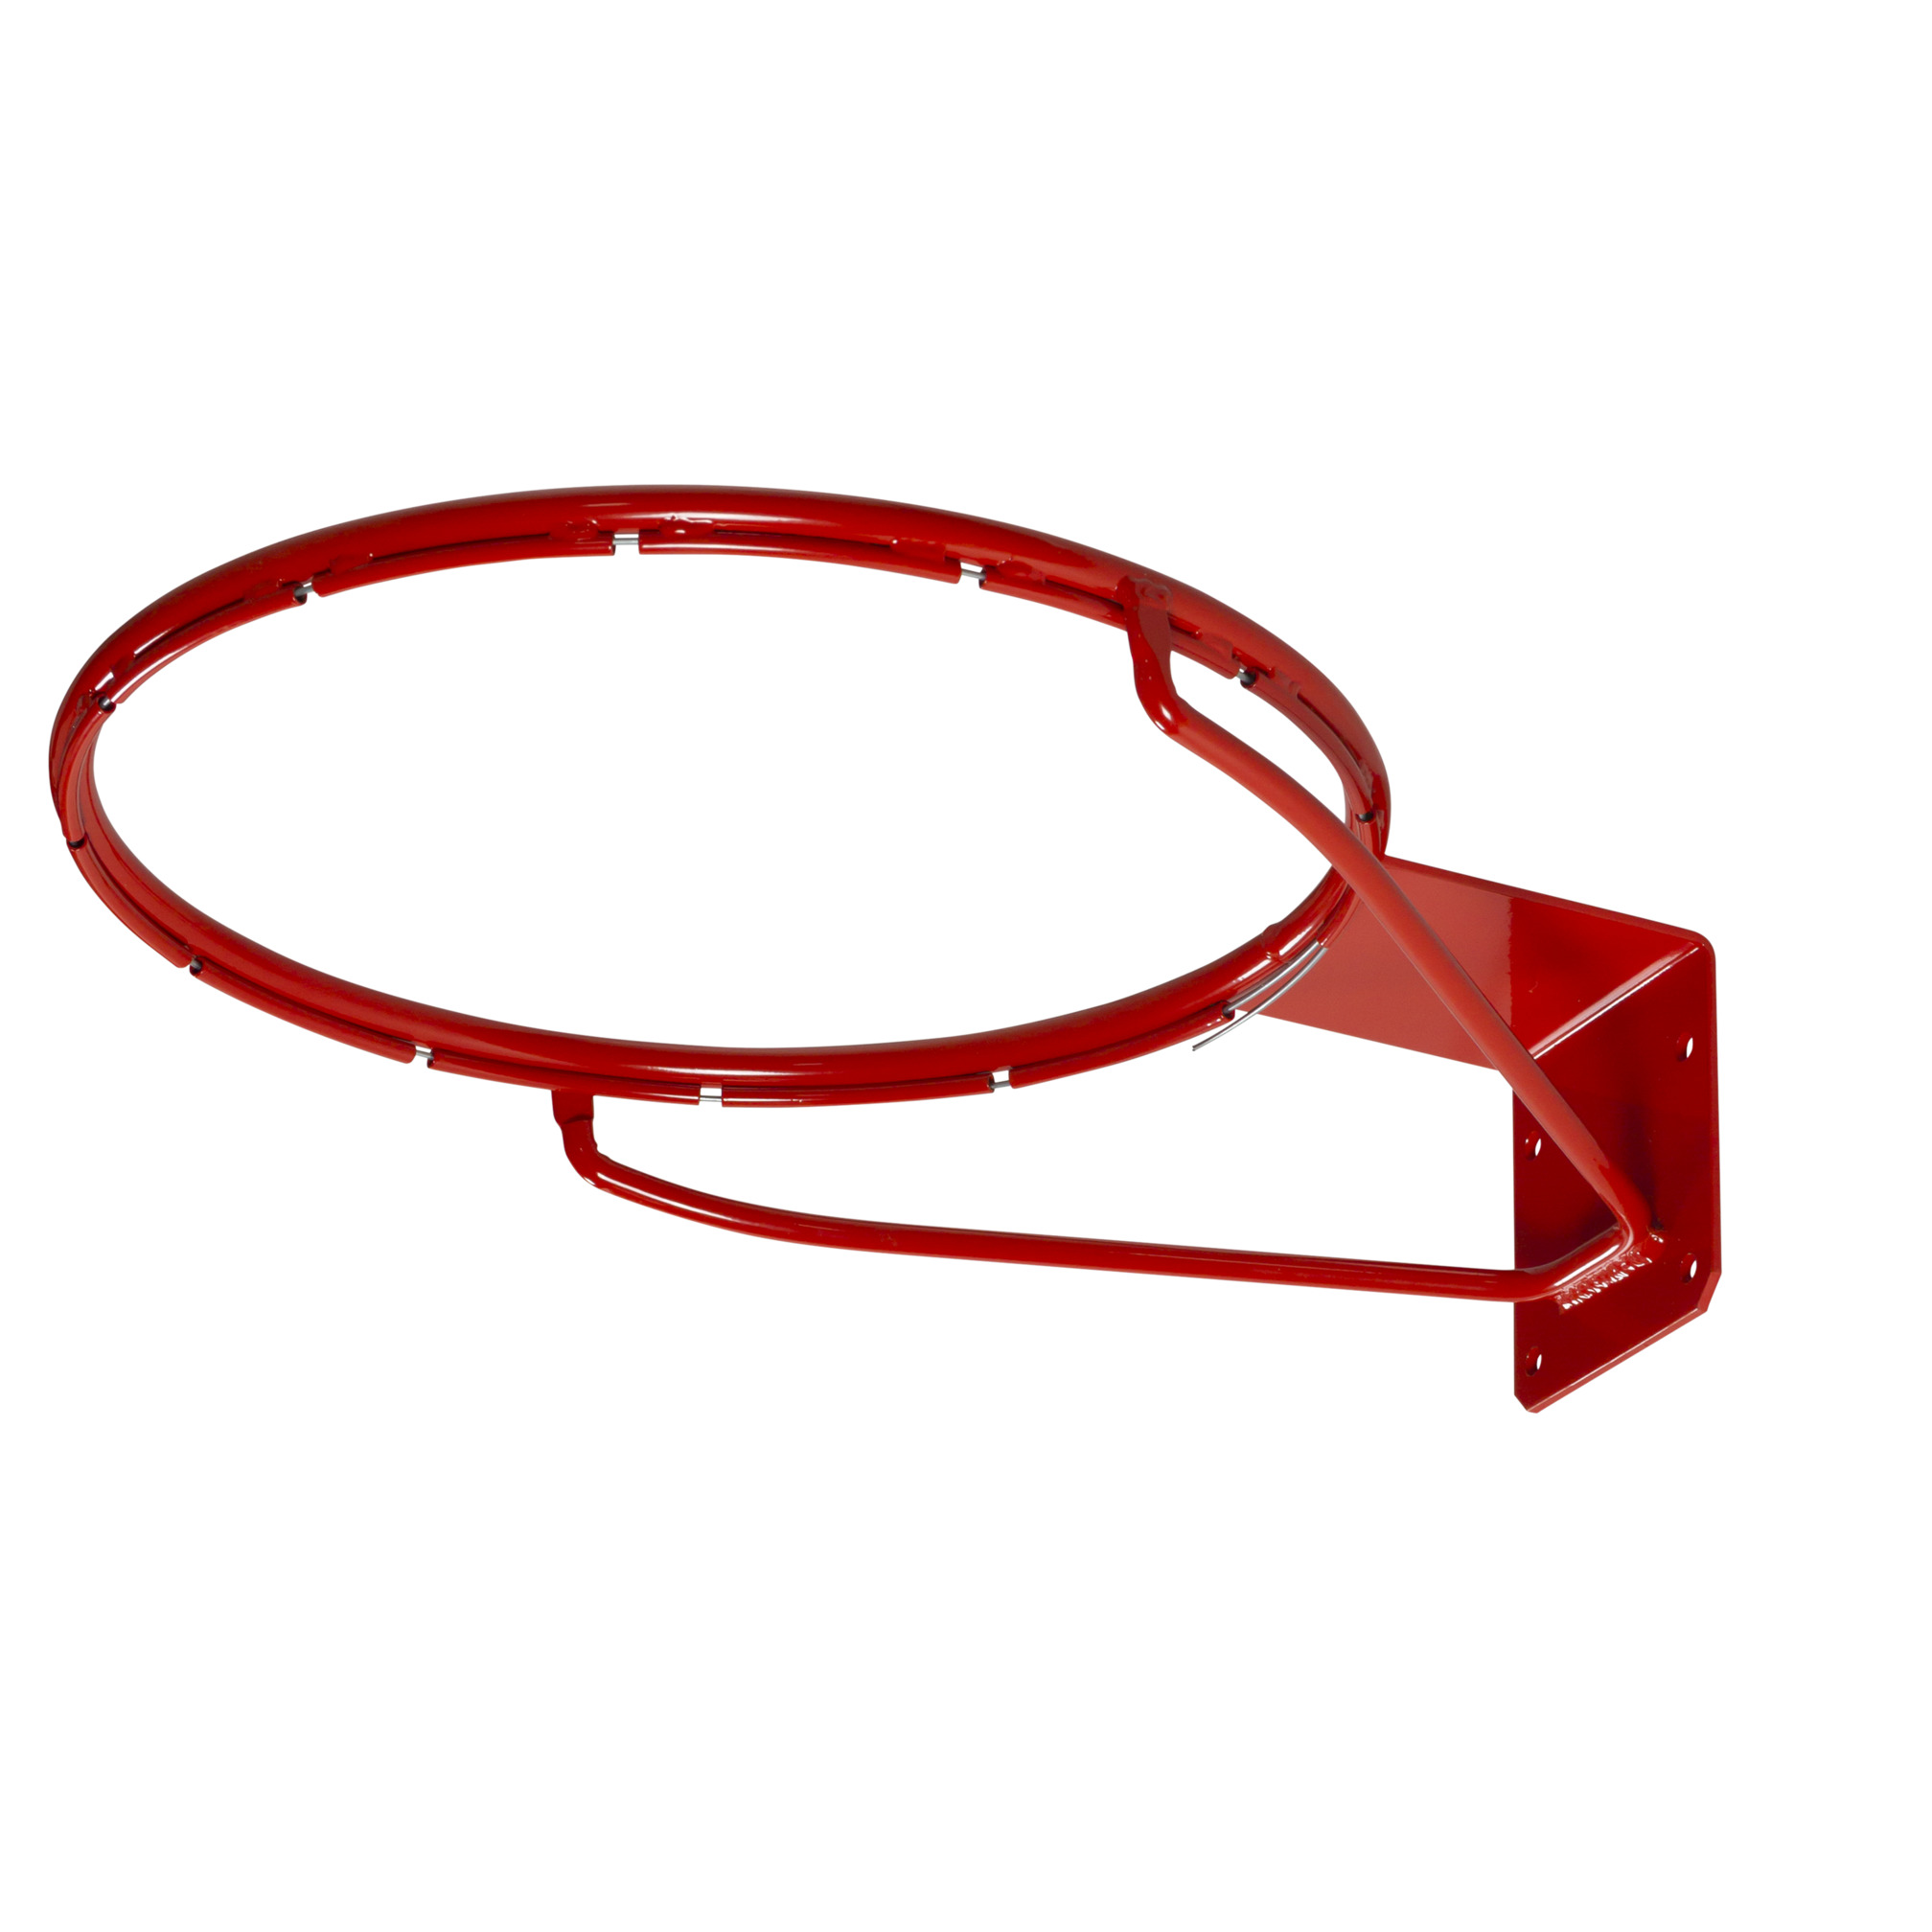 Basketballkorb Standard